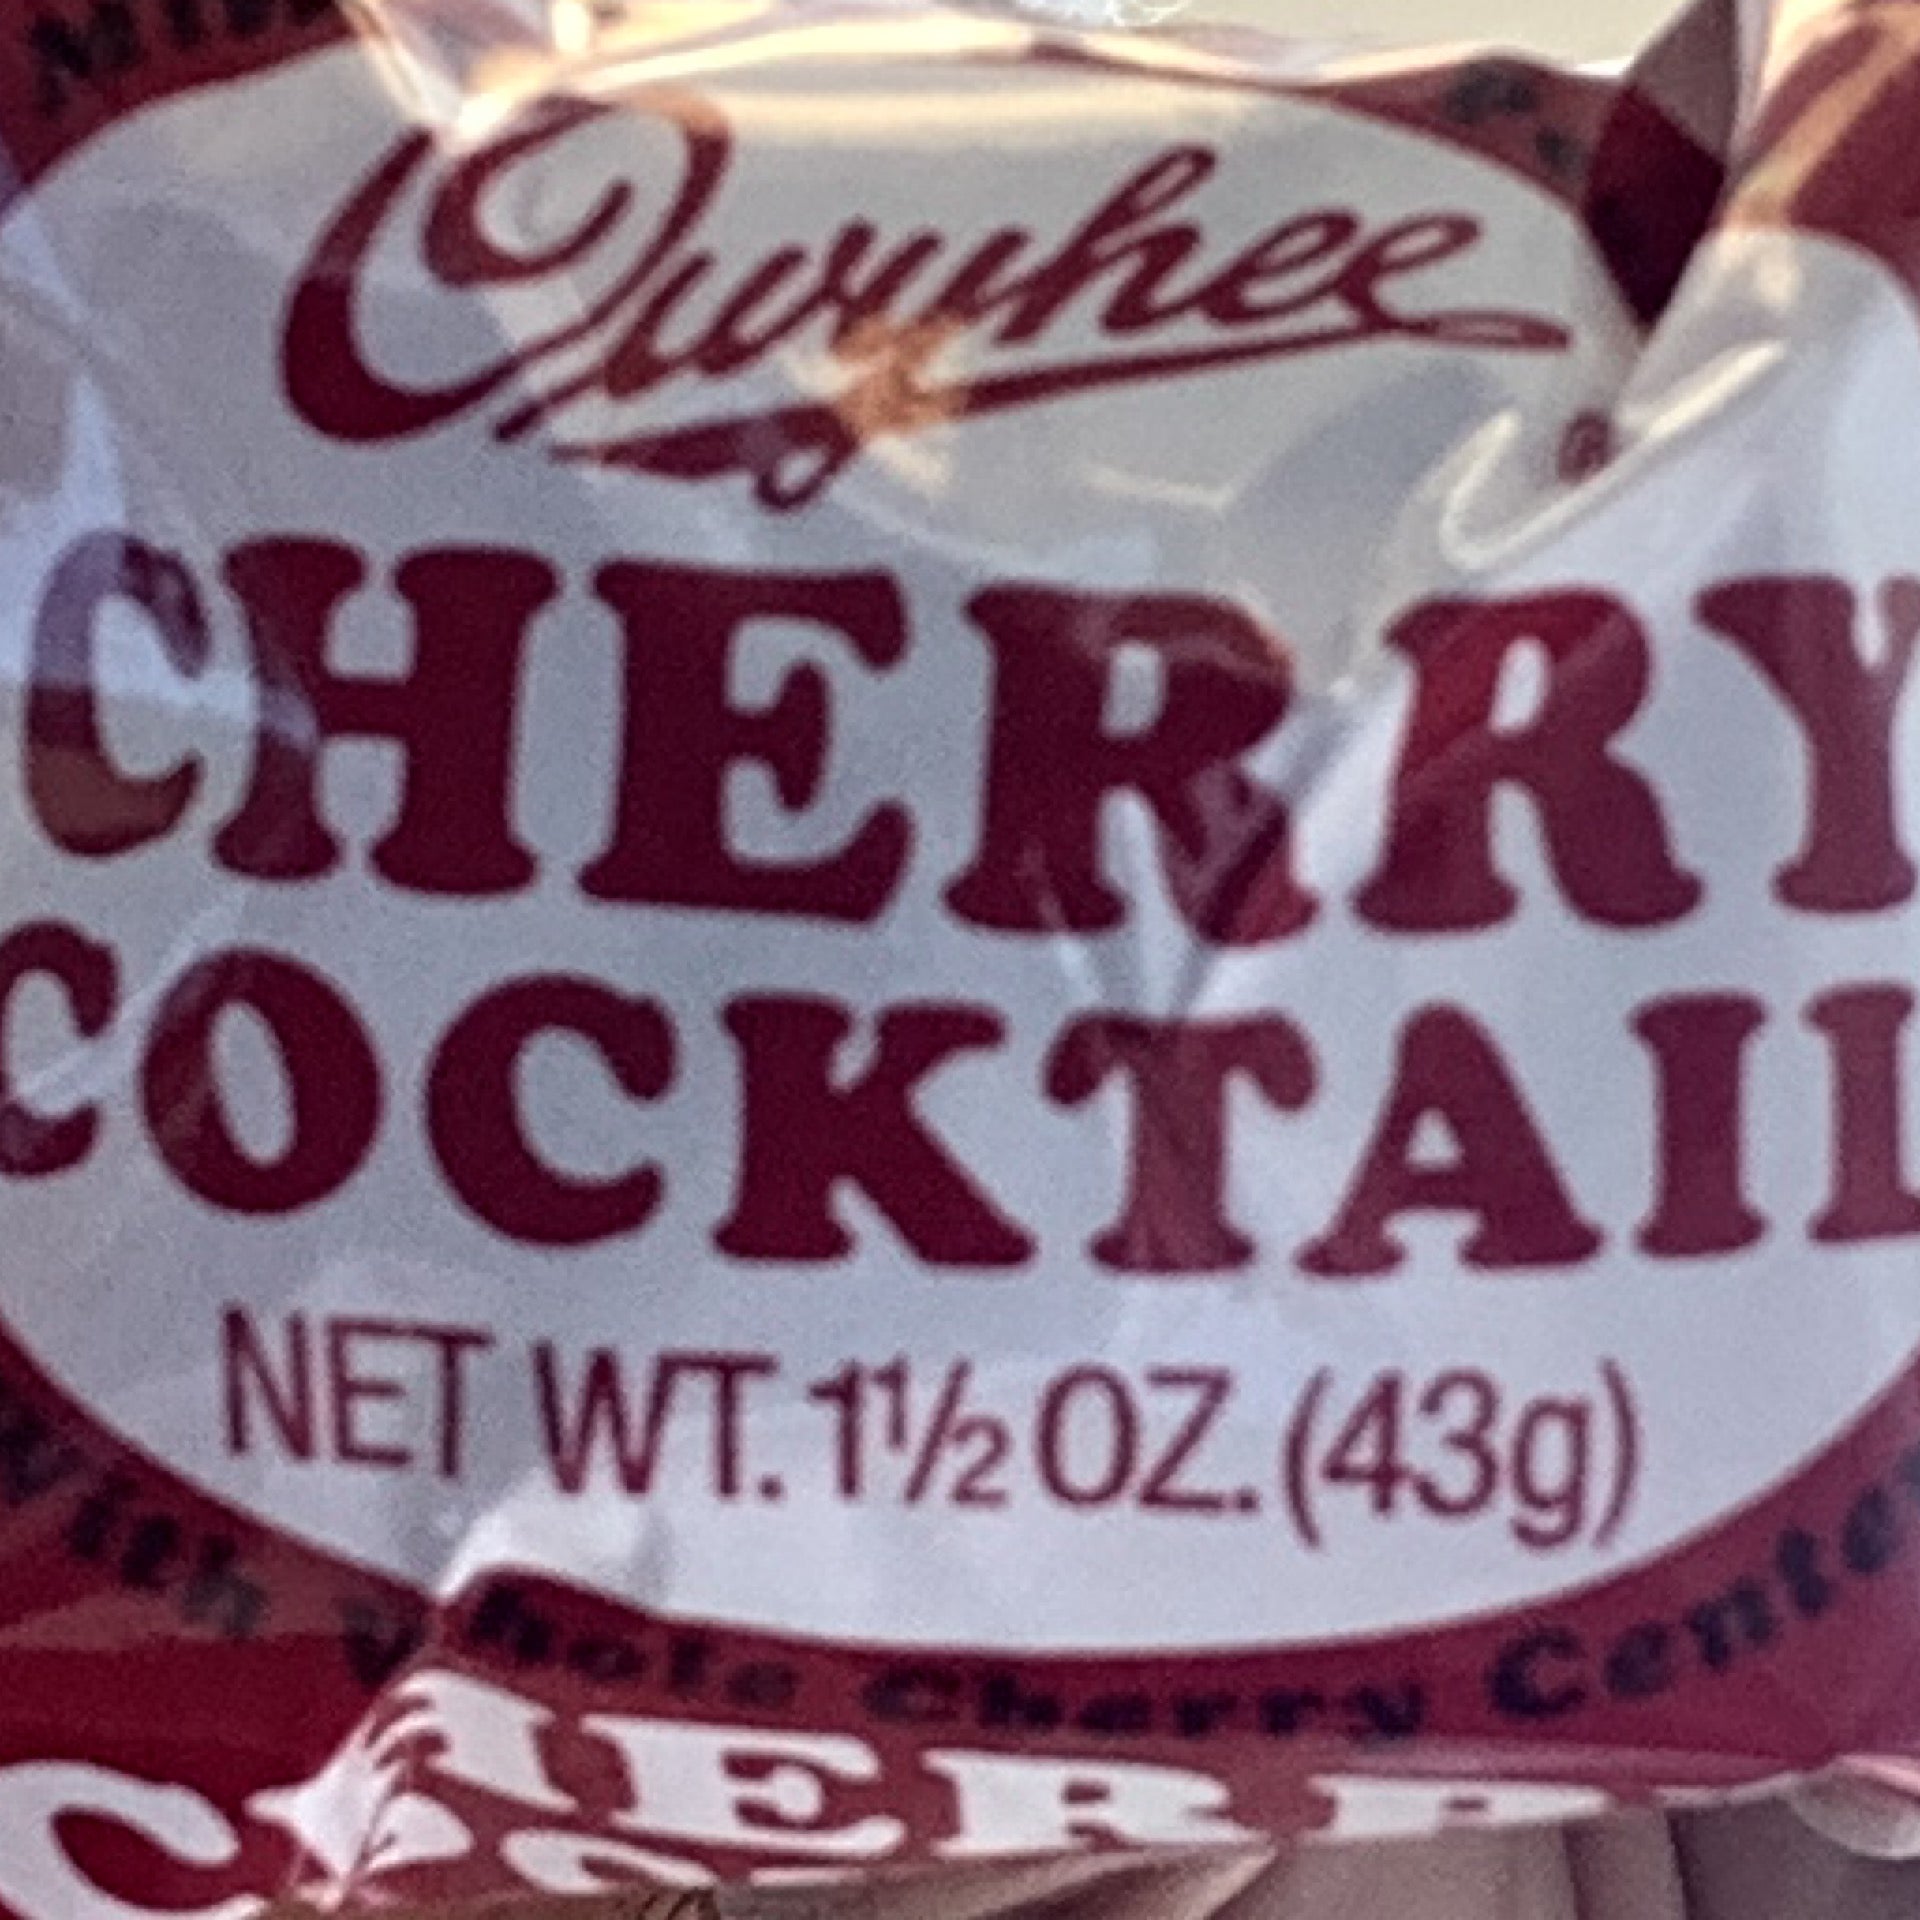 Owyhee Cherry Cocktail